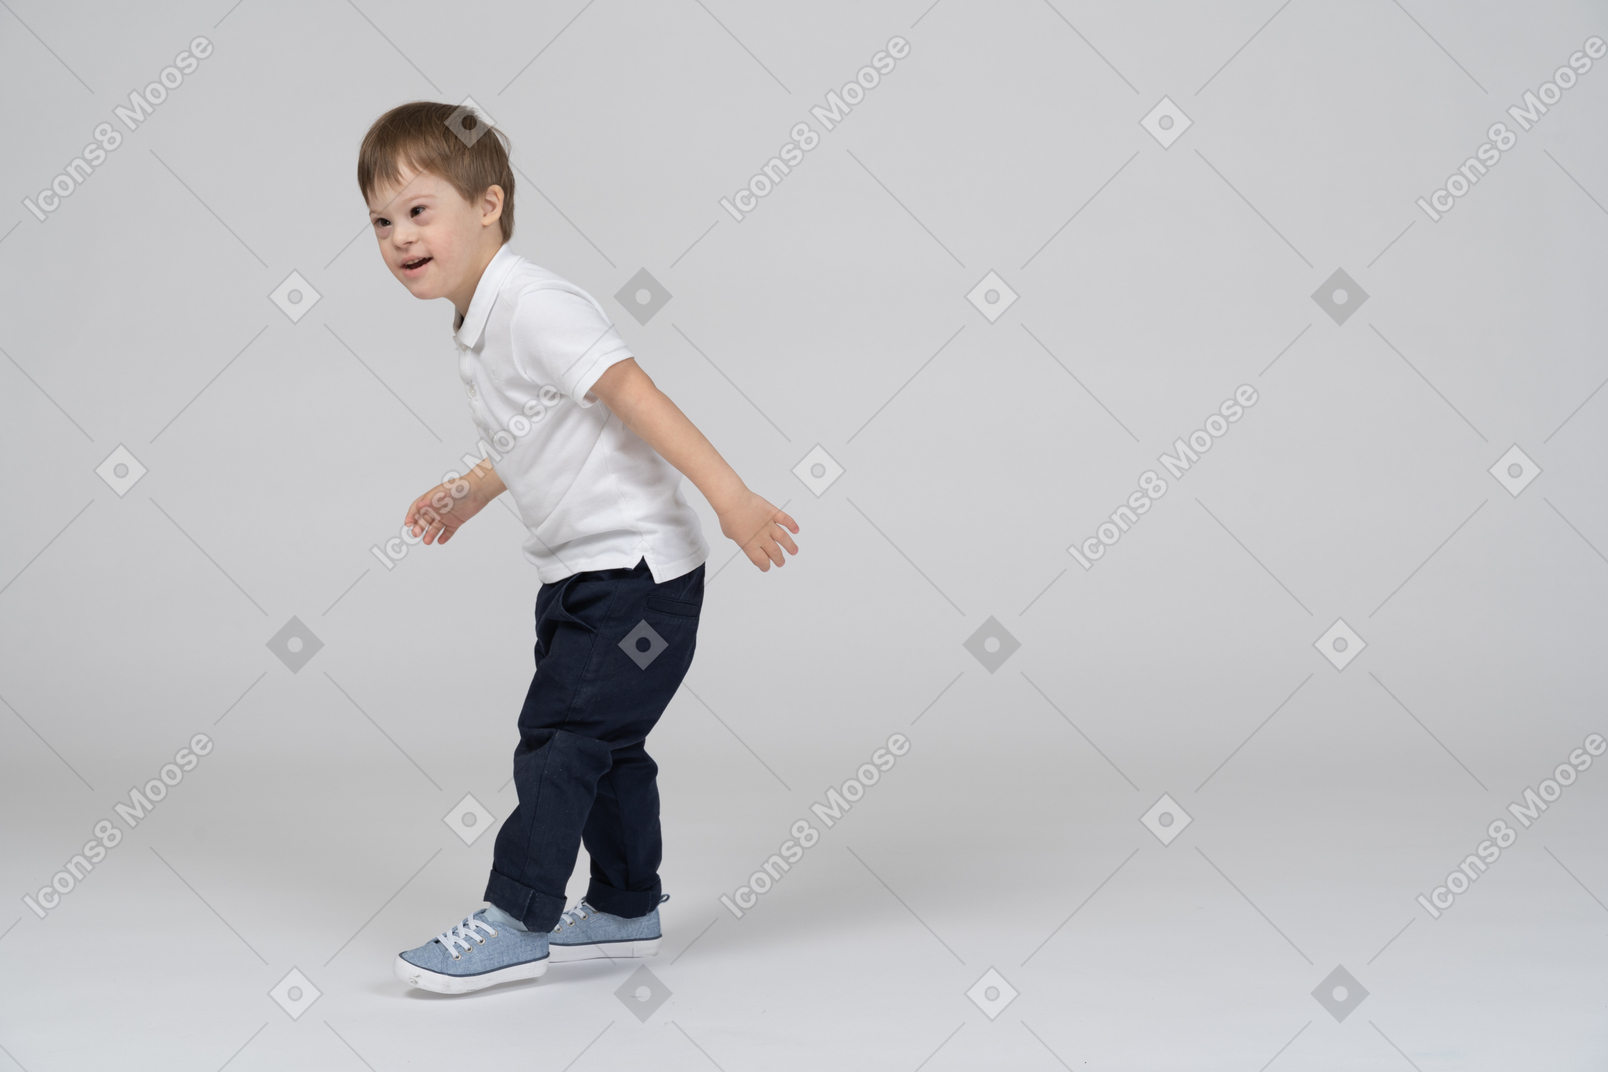 Side view of a little boy running